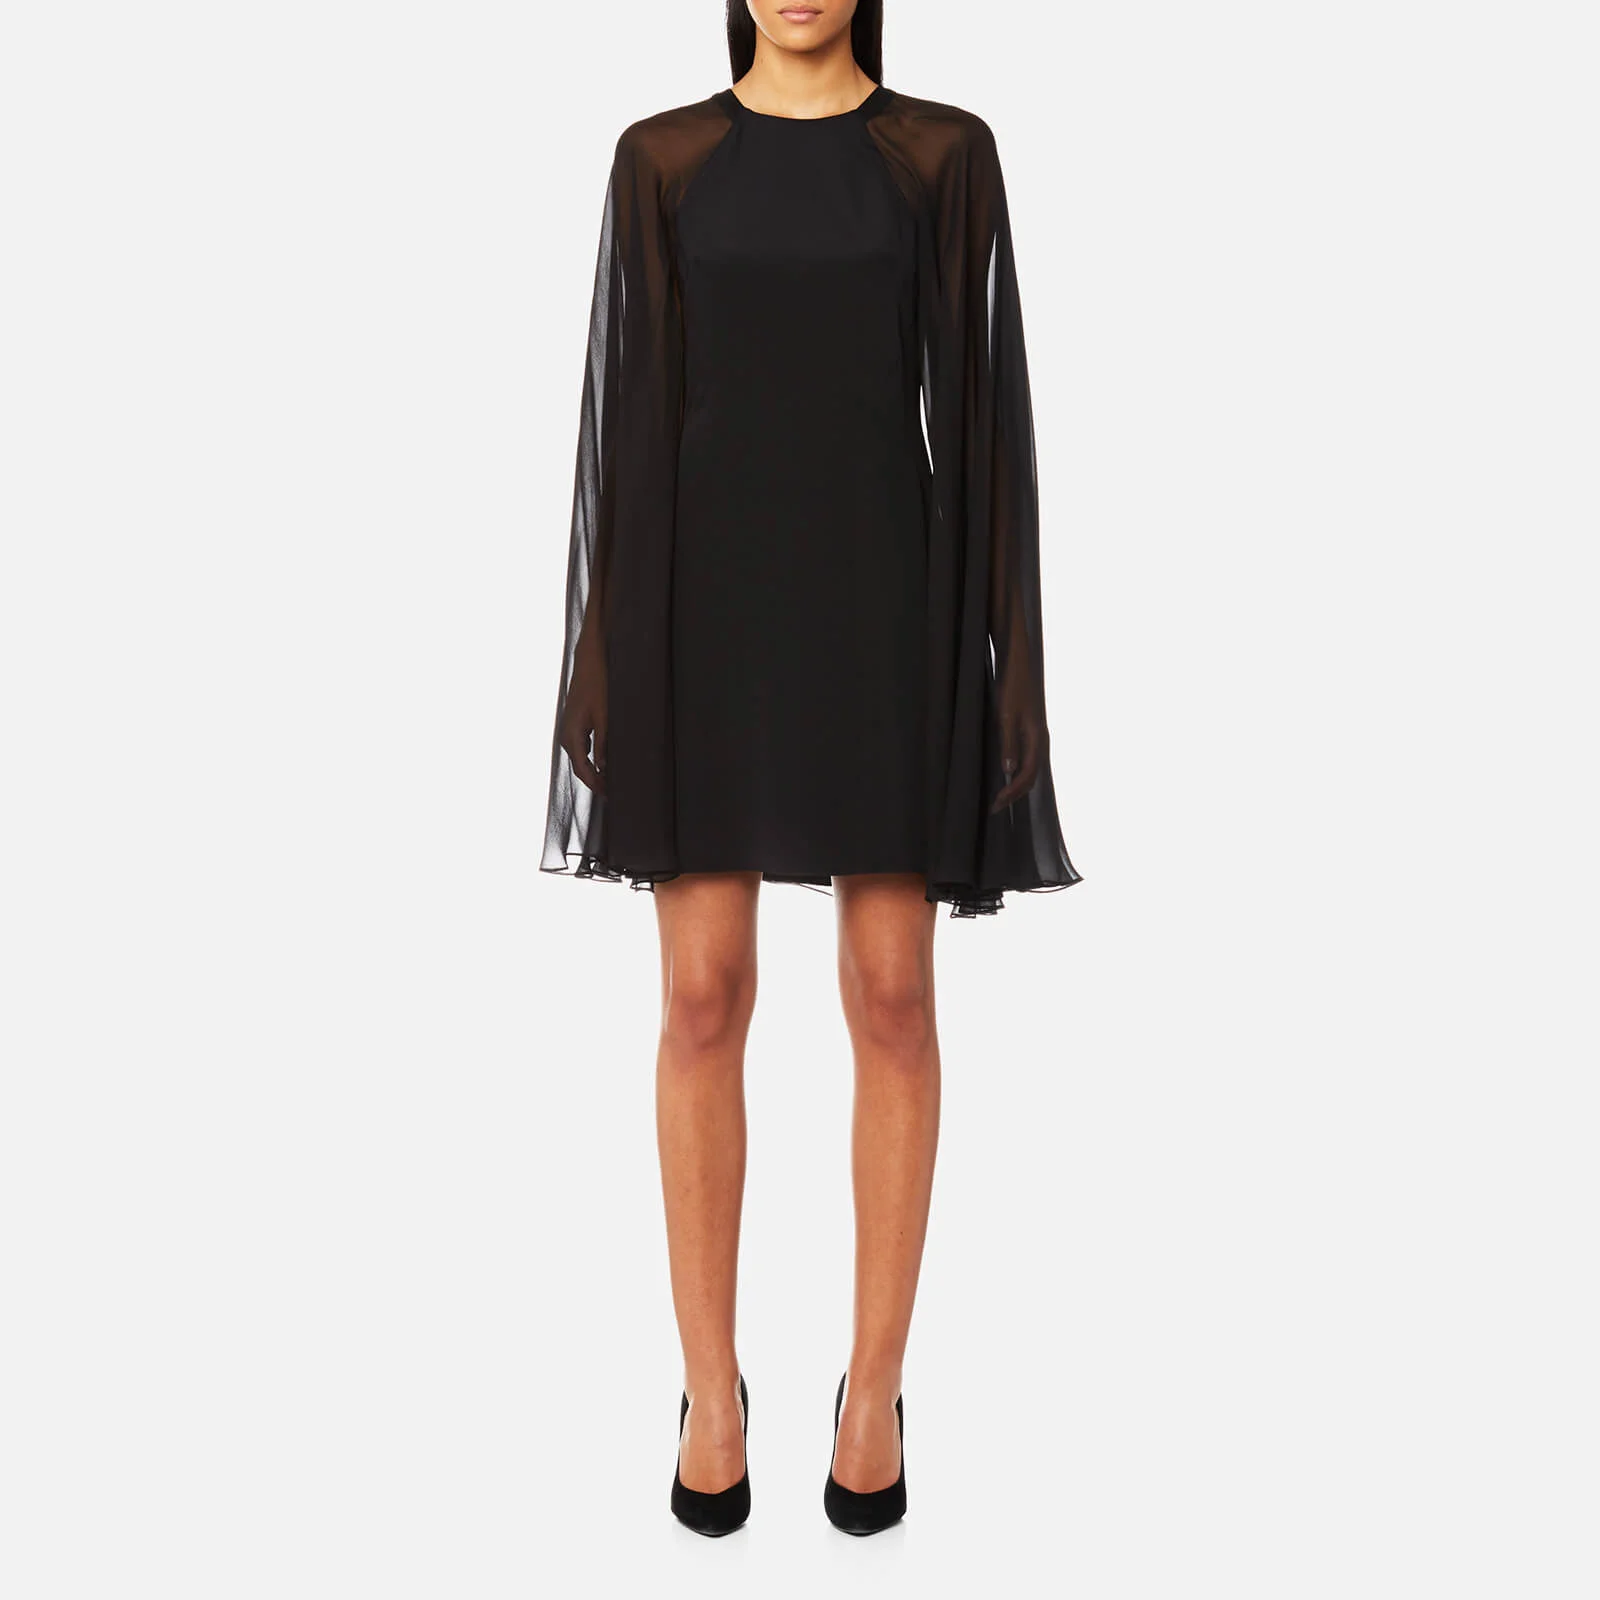 Karl Lagerfeld Women's Silk Dress with Sheer Cape - Black Image 1